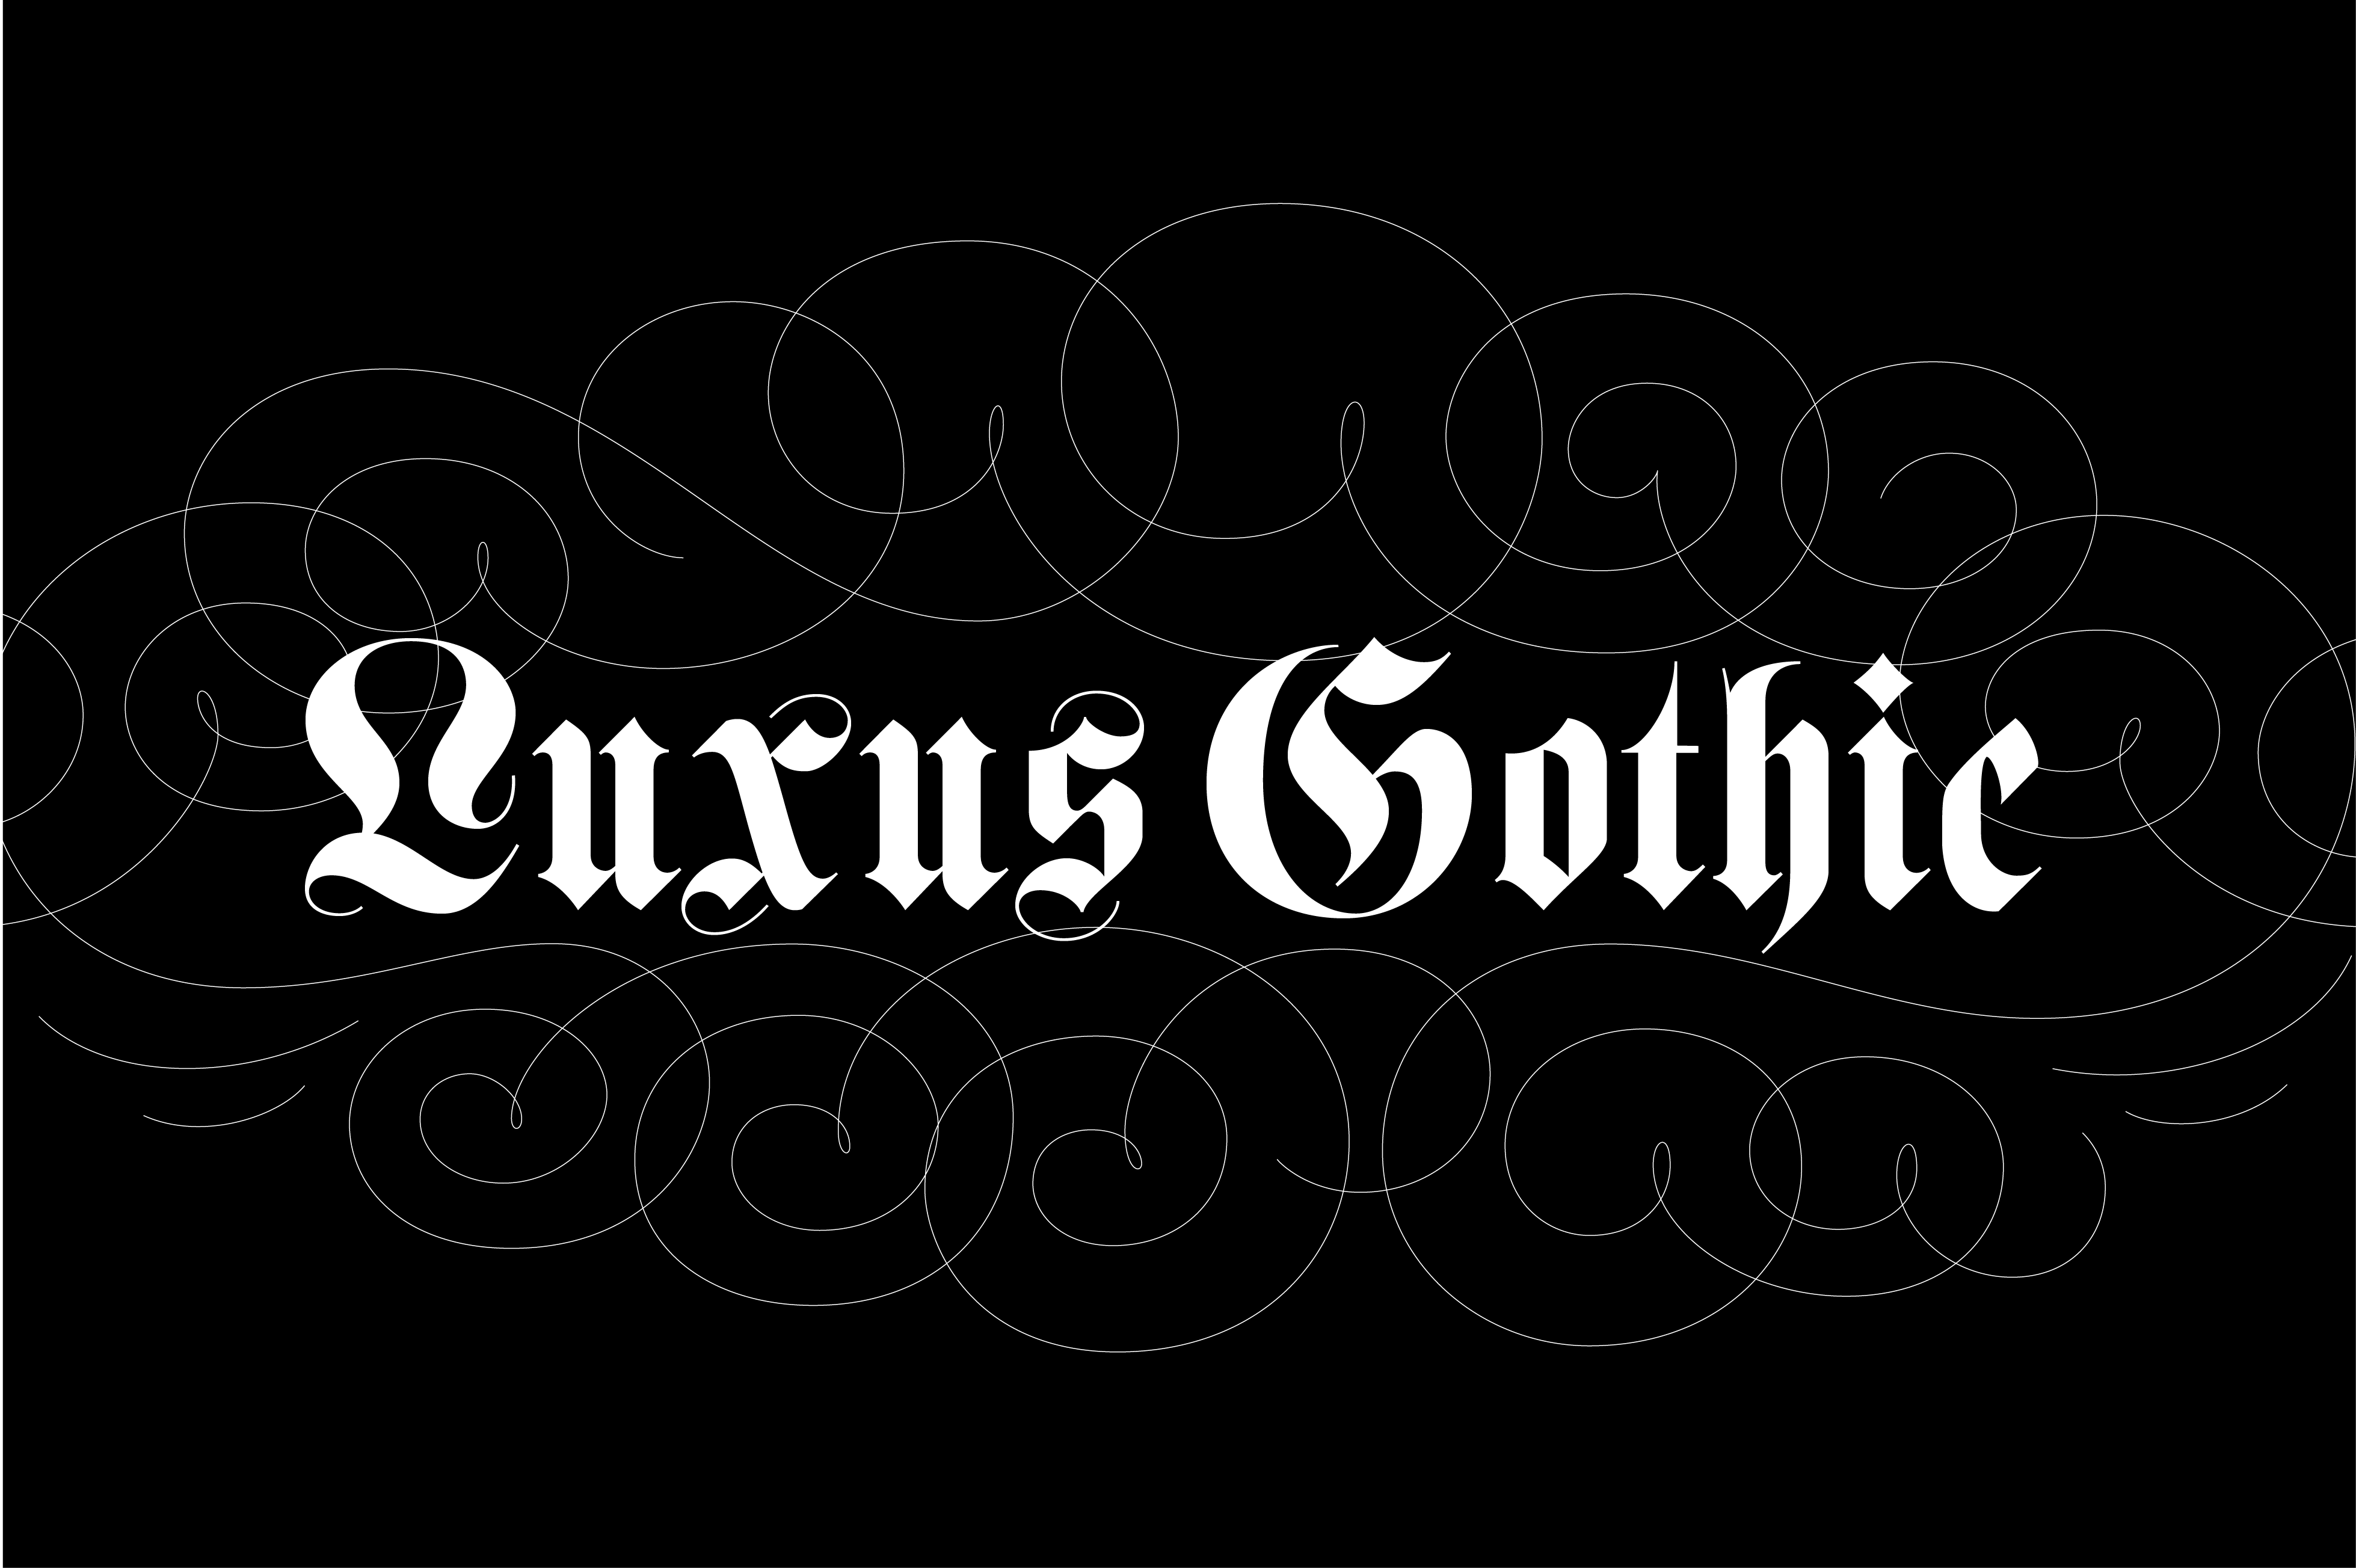 gothic font